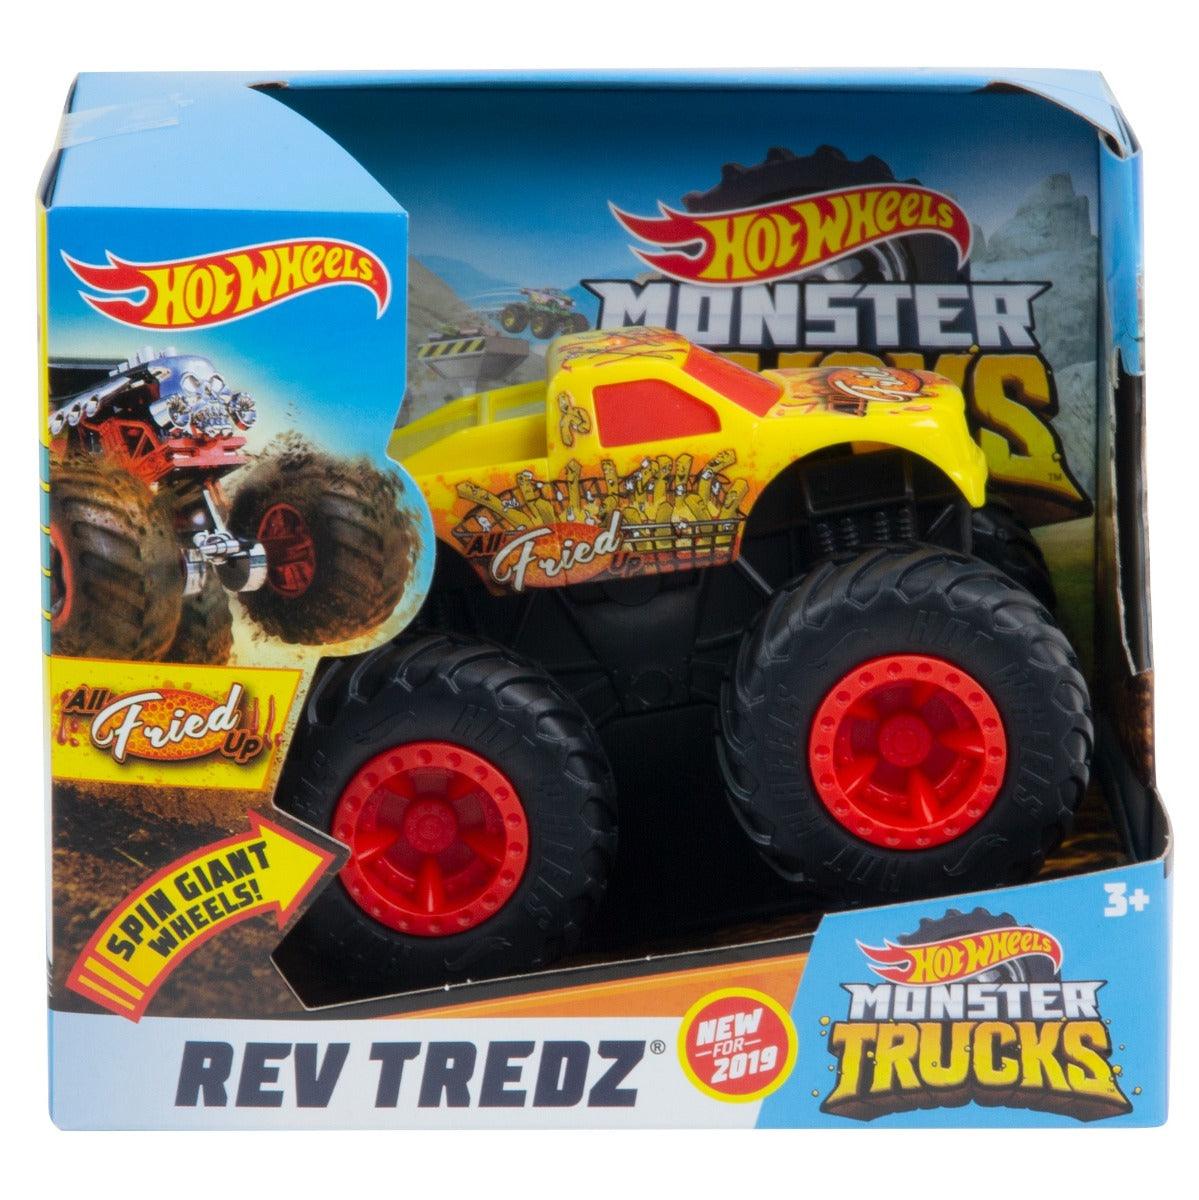 Hot Wheels Monster Trucks 1:43 All Fried Up Vehicle¬¨‚Ä†